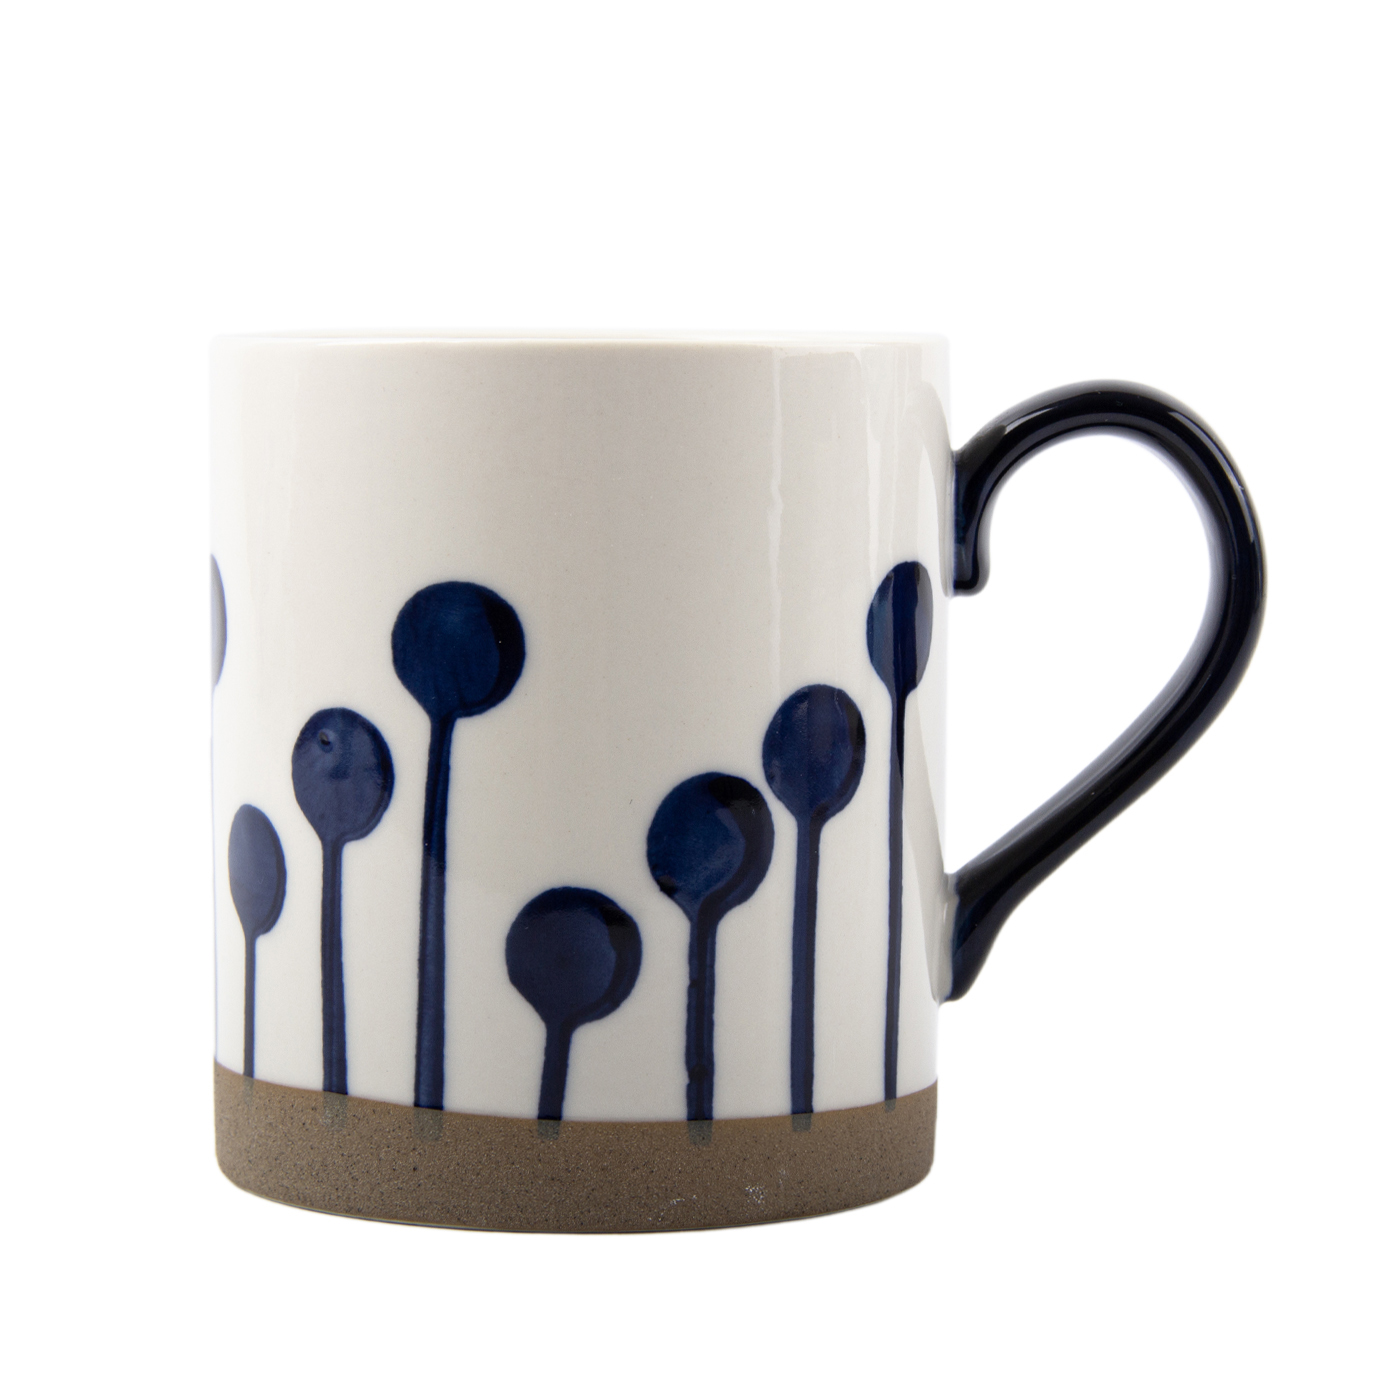 16 oz. Hand Painted Ceramic Coffee Mug